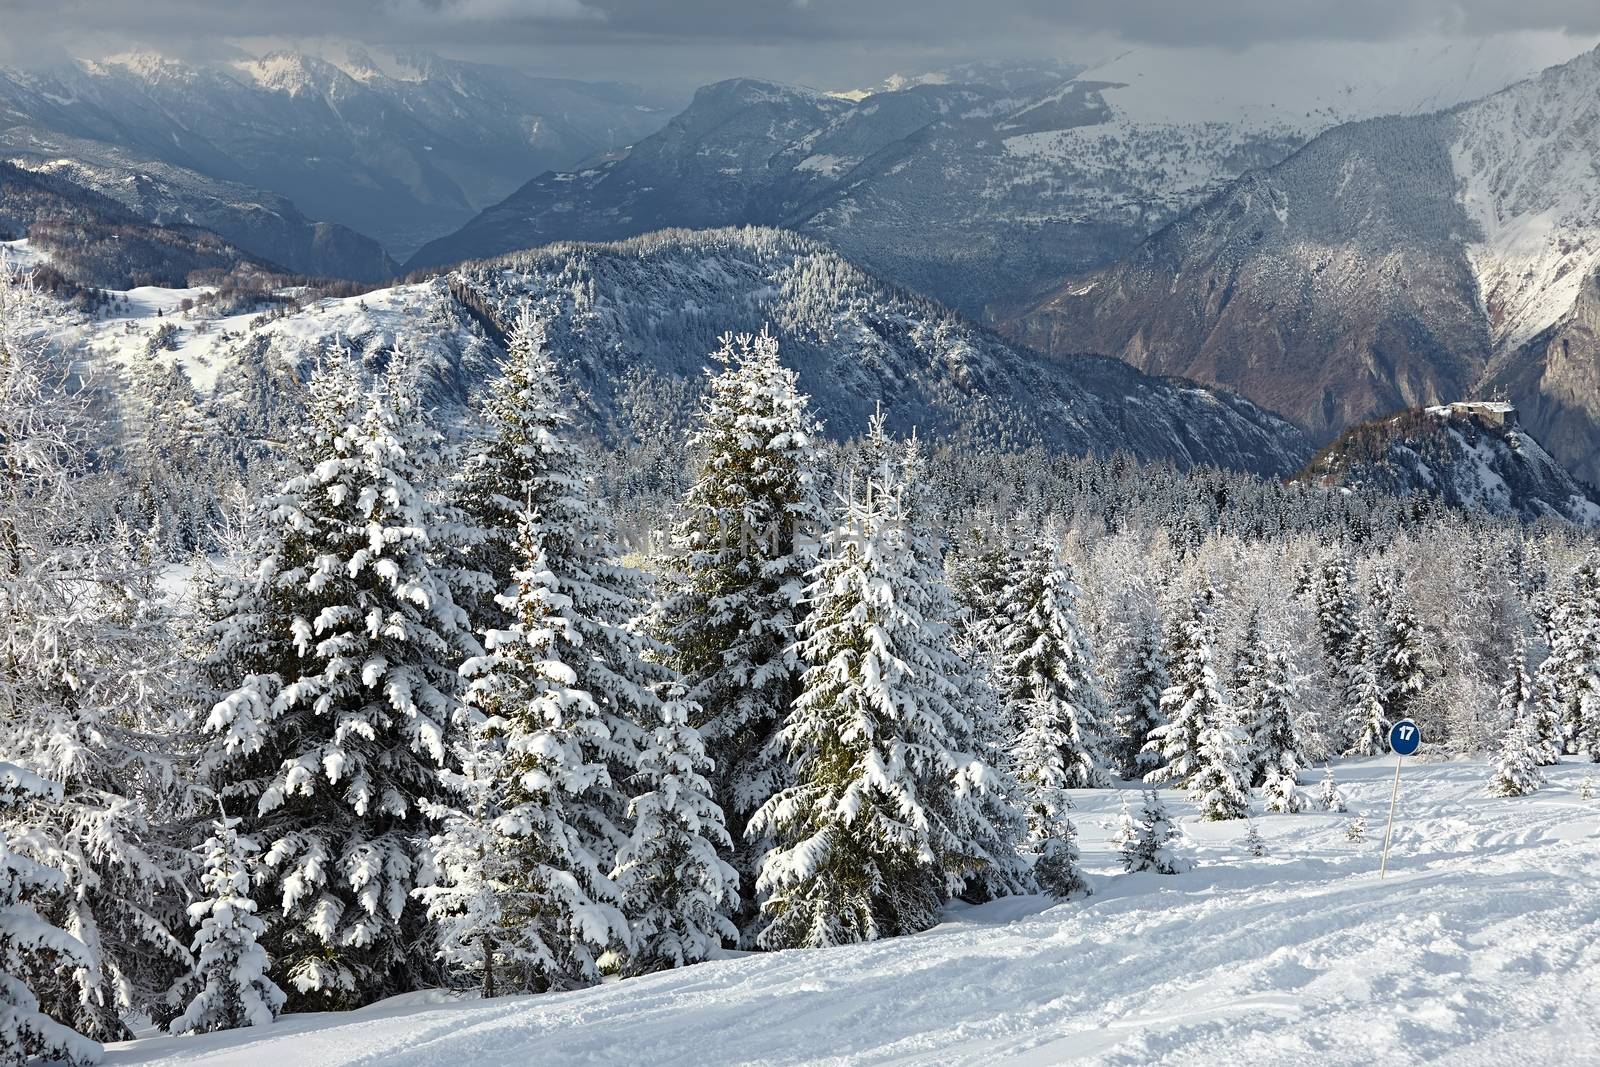 Snowy pine trees on a winter landscape